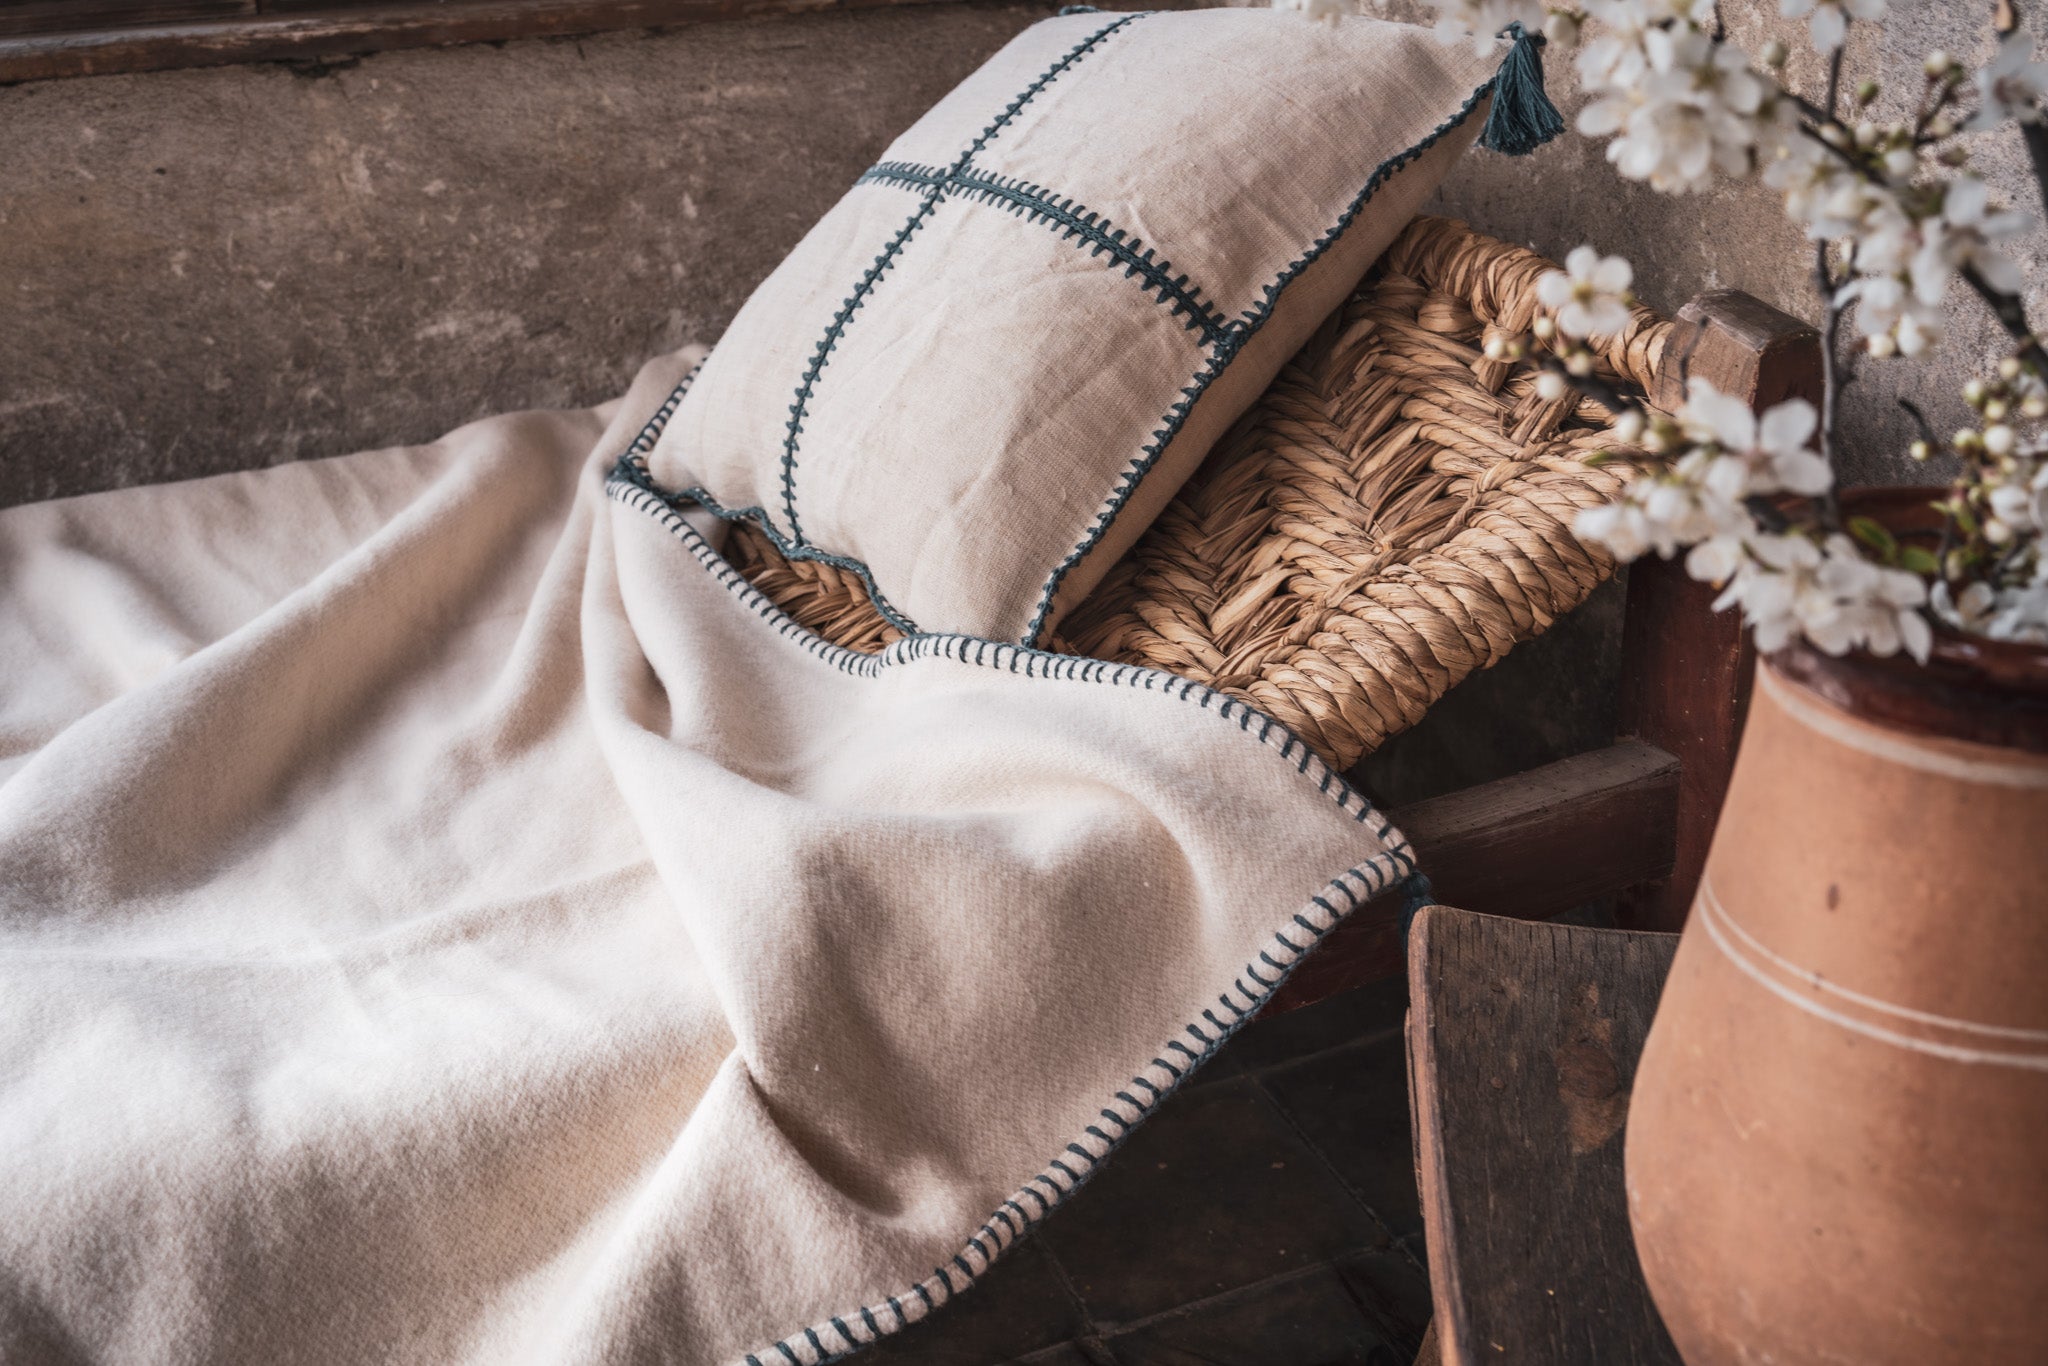 Pillow: Antique Hungarian handwoven hemp, hand stitched - P416